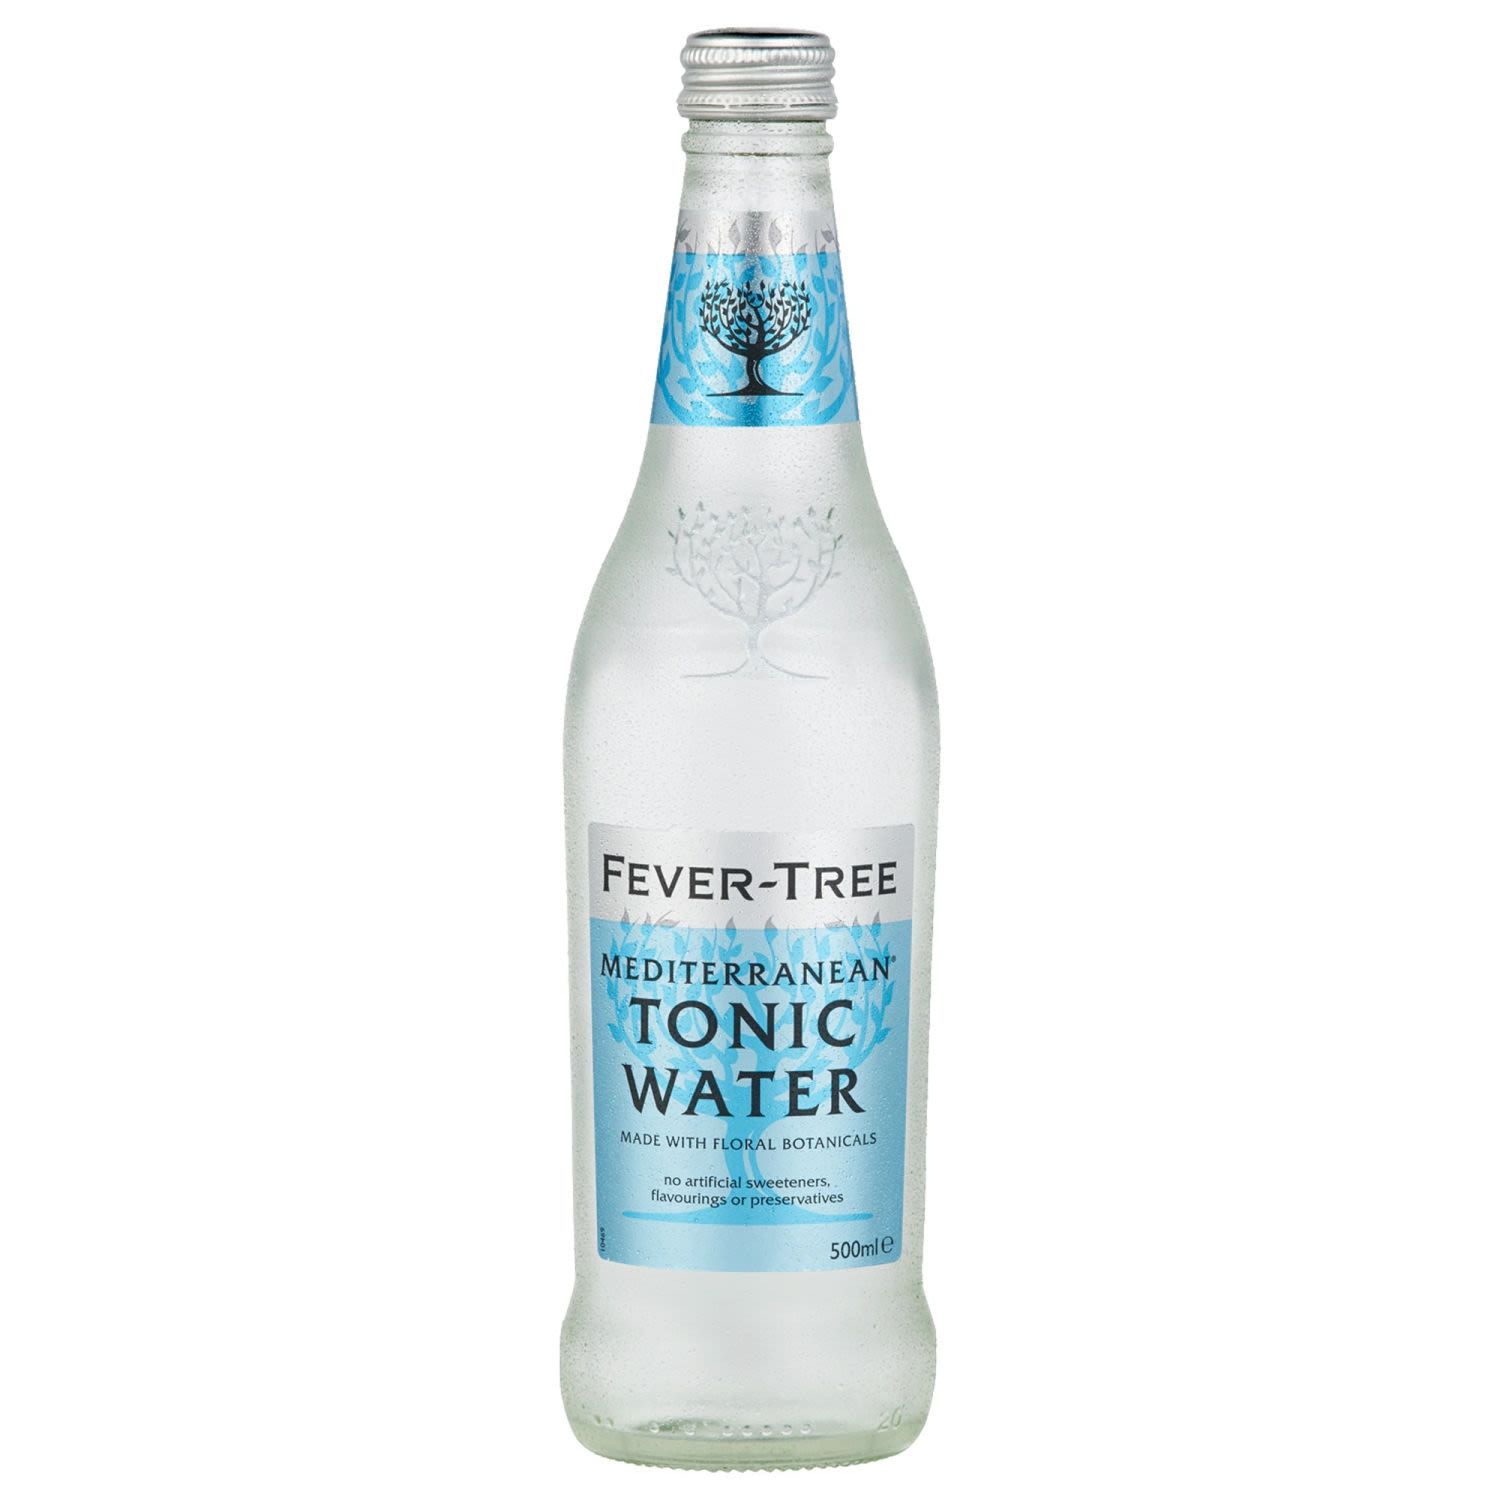 Fever-Tree Mediterranean Tonic Water 500mL Bottle